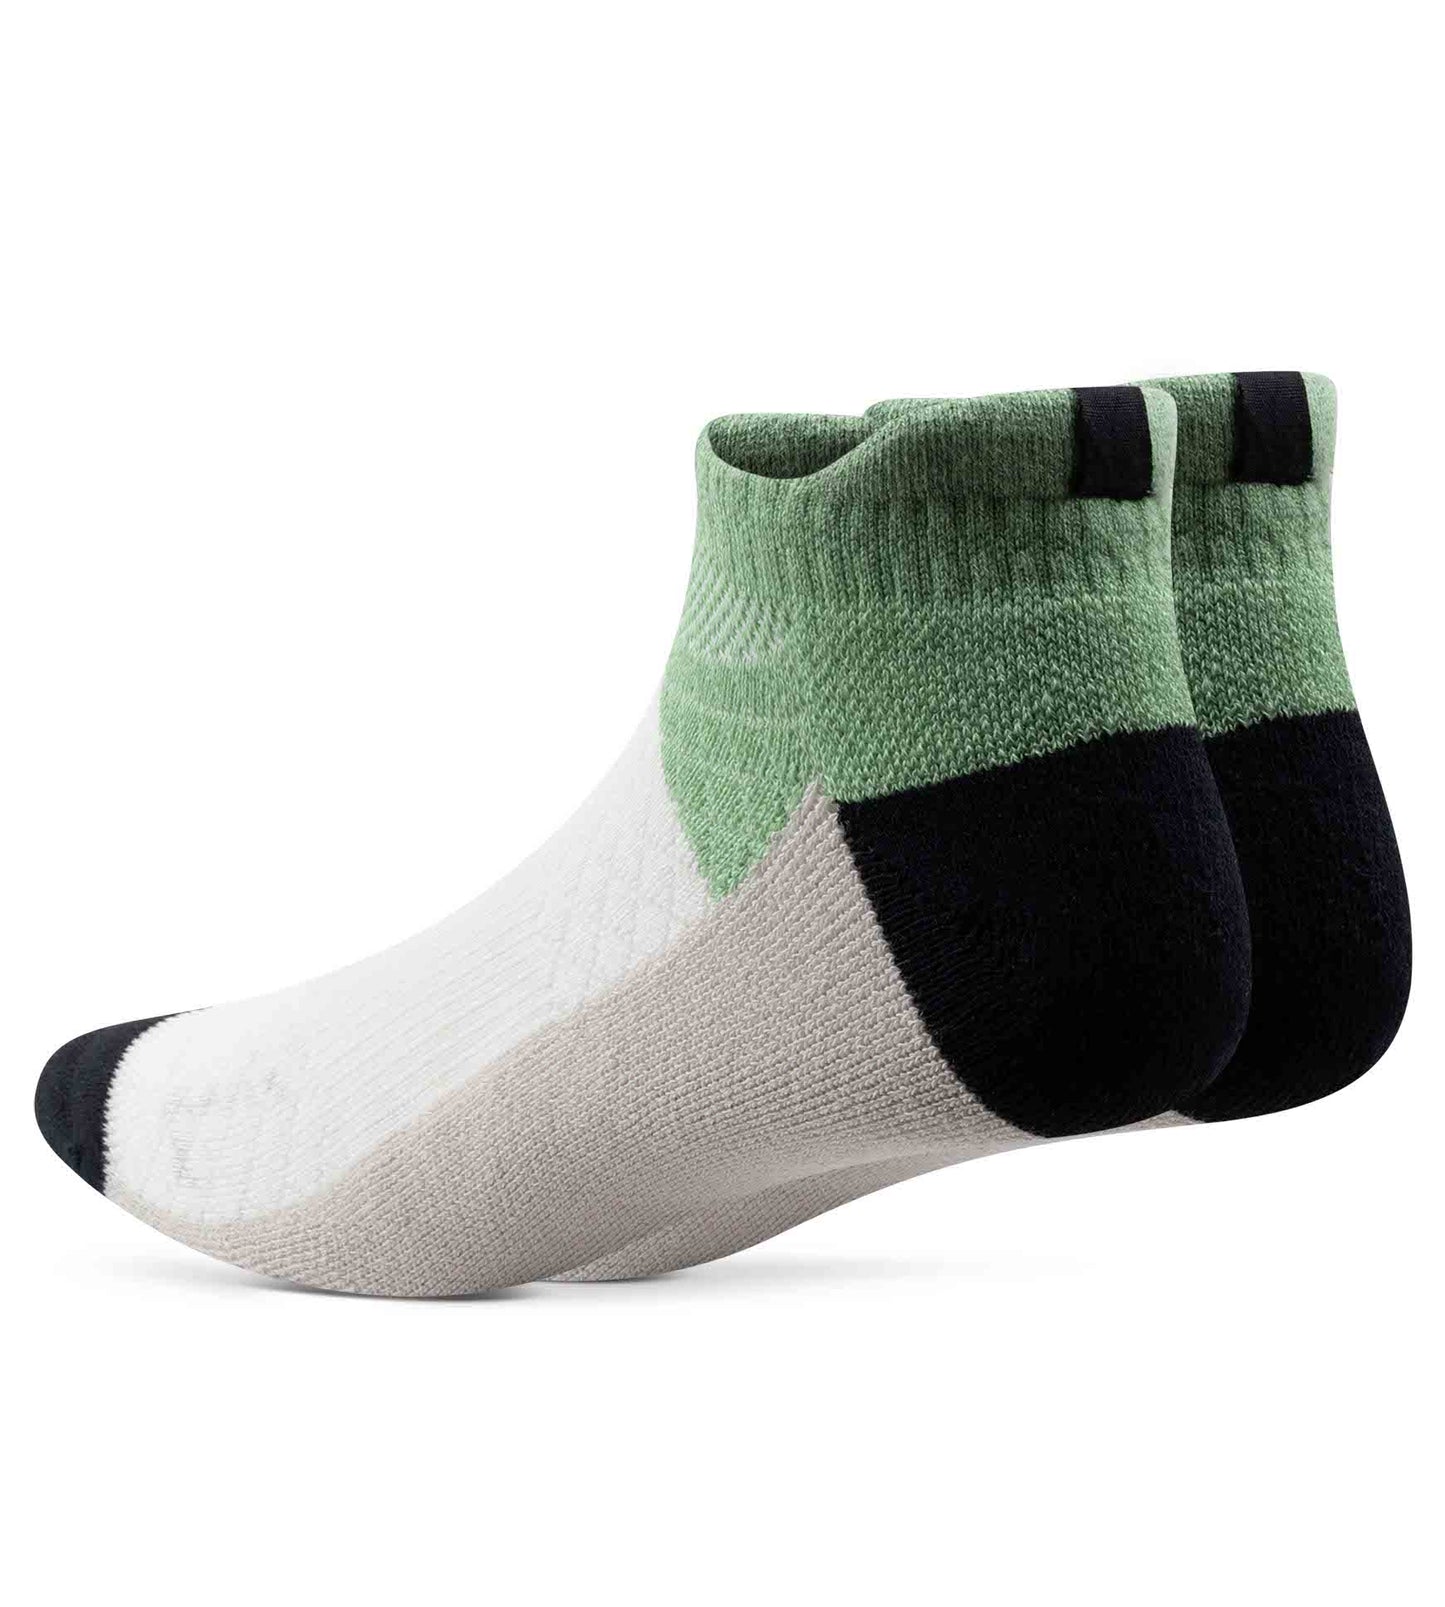 Hustle Cushion Low-Cut Socks 3 Pack colors contain: Dark slate gray, Dark Gray, Black, Gray, Lavender, Dim gray, Dark sea green, Silver, Dark slate gray